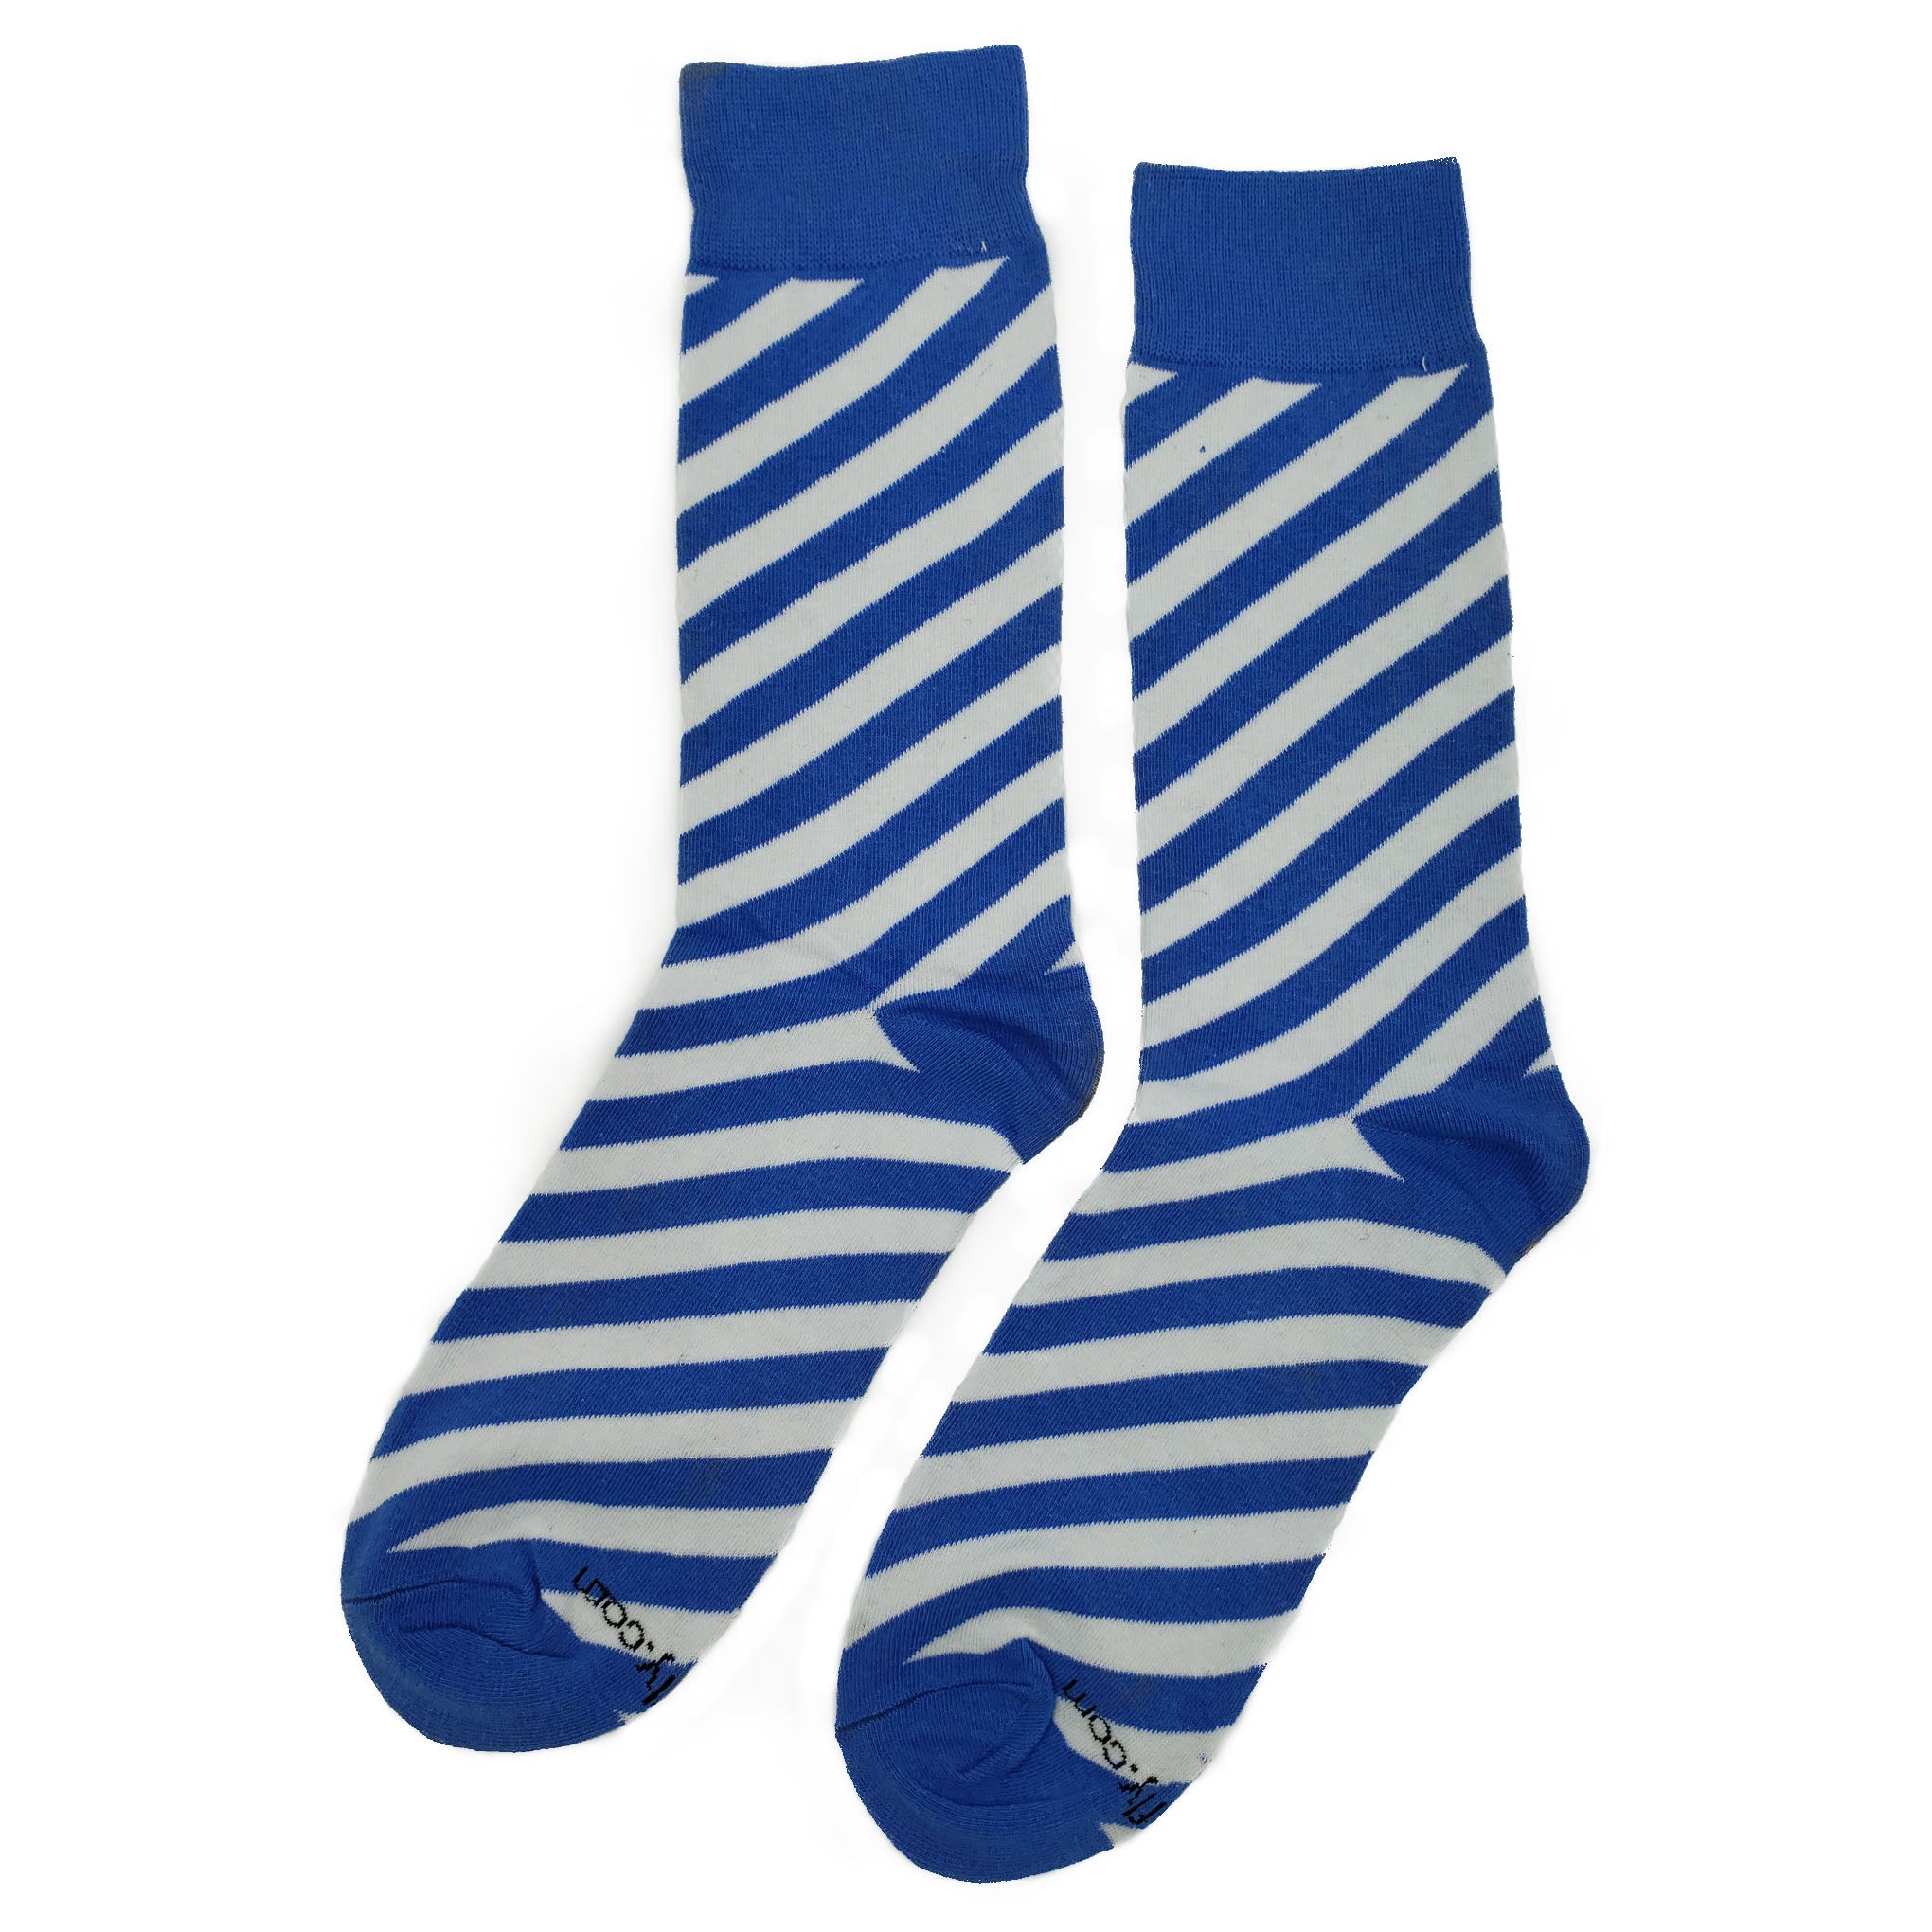 Blue and White Stripe Socks - Fun and Crazy Socks at Sockfly.com